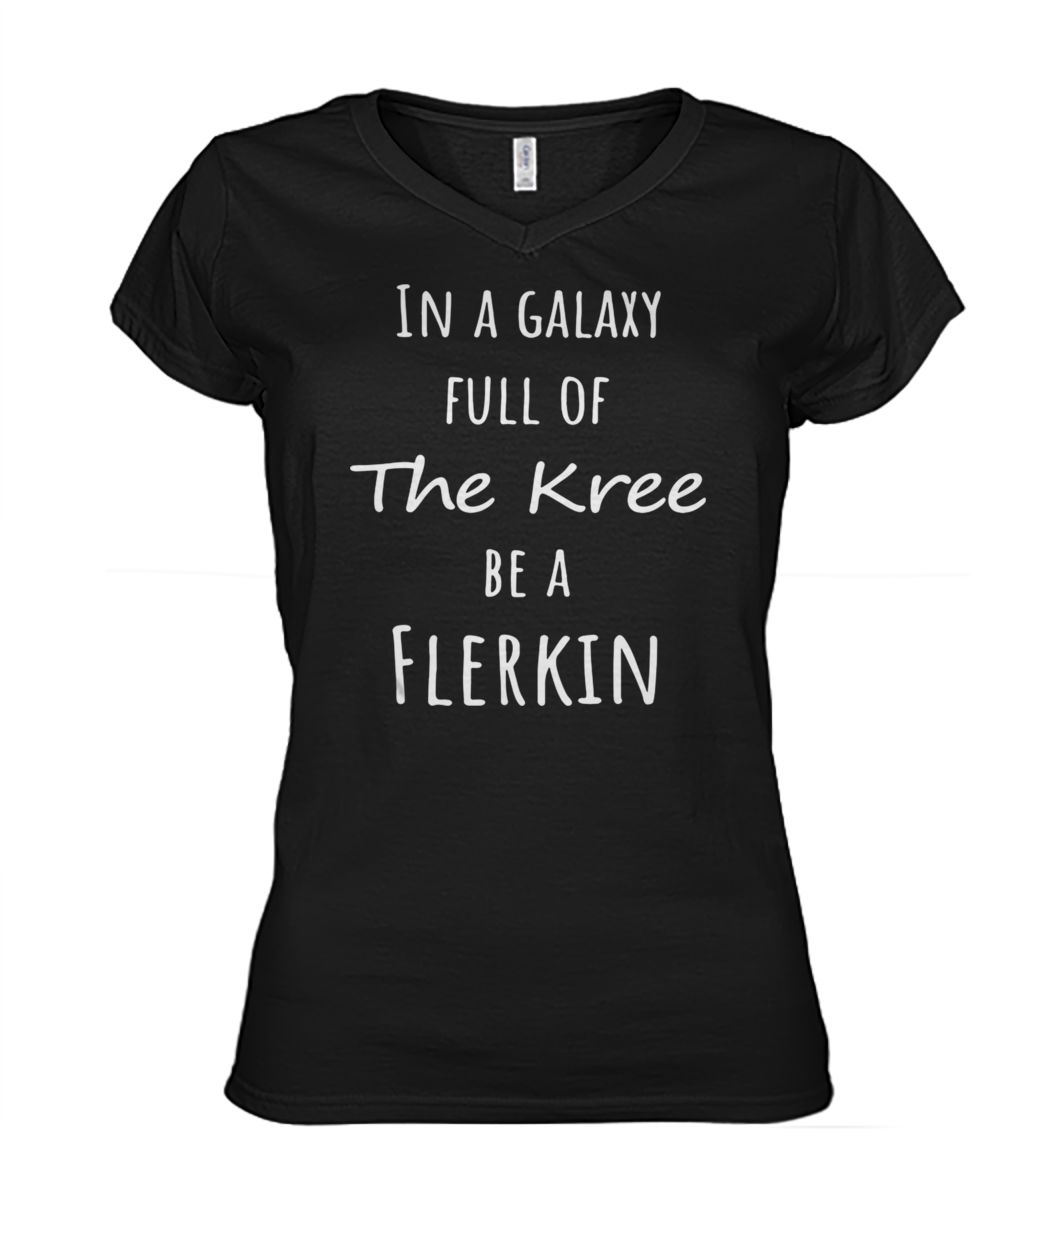 Caption marvel flerken in a galaxy full of the knee be a flerkin women's v-neck